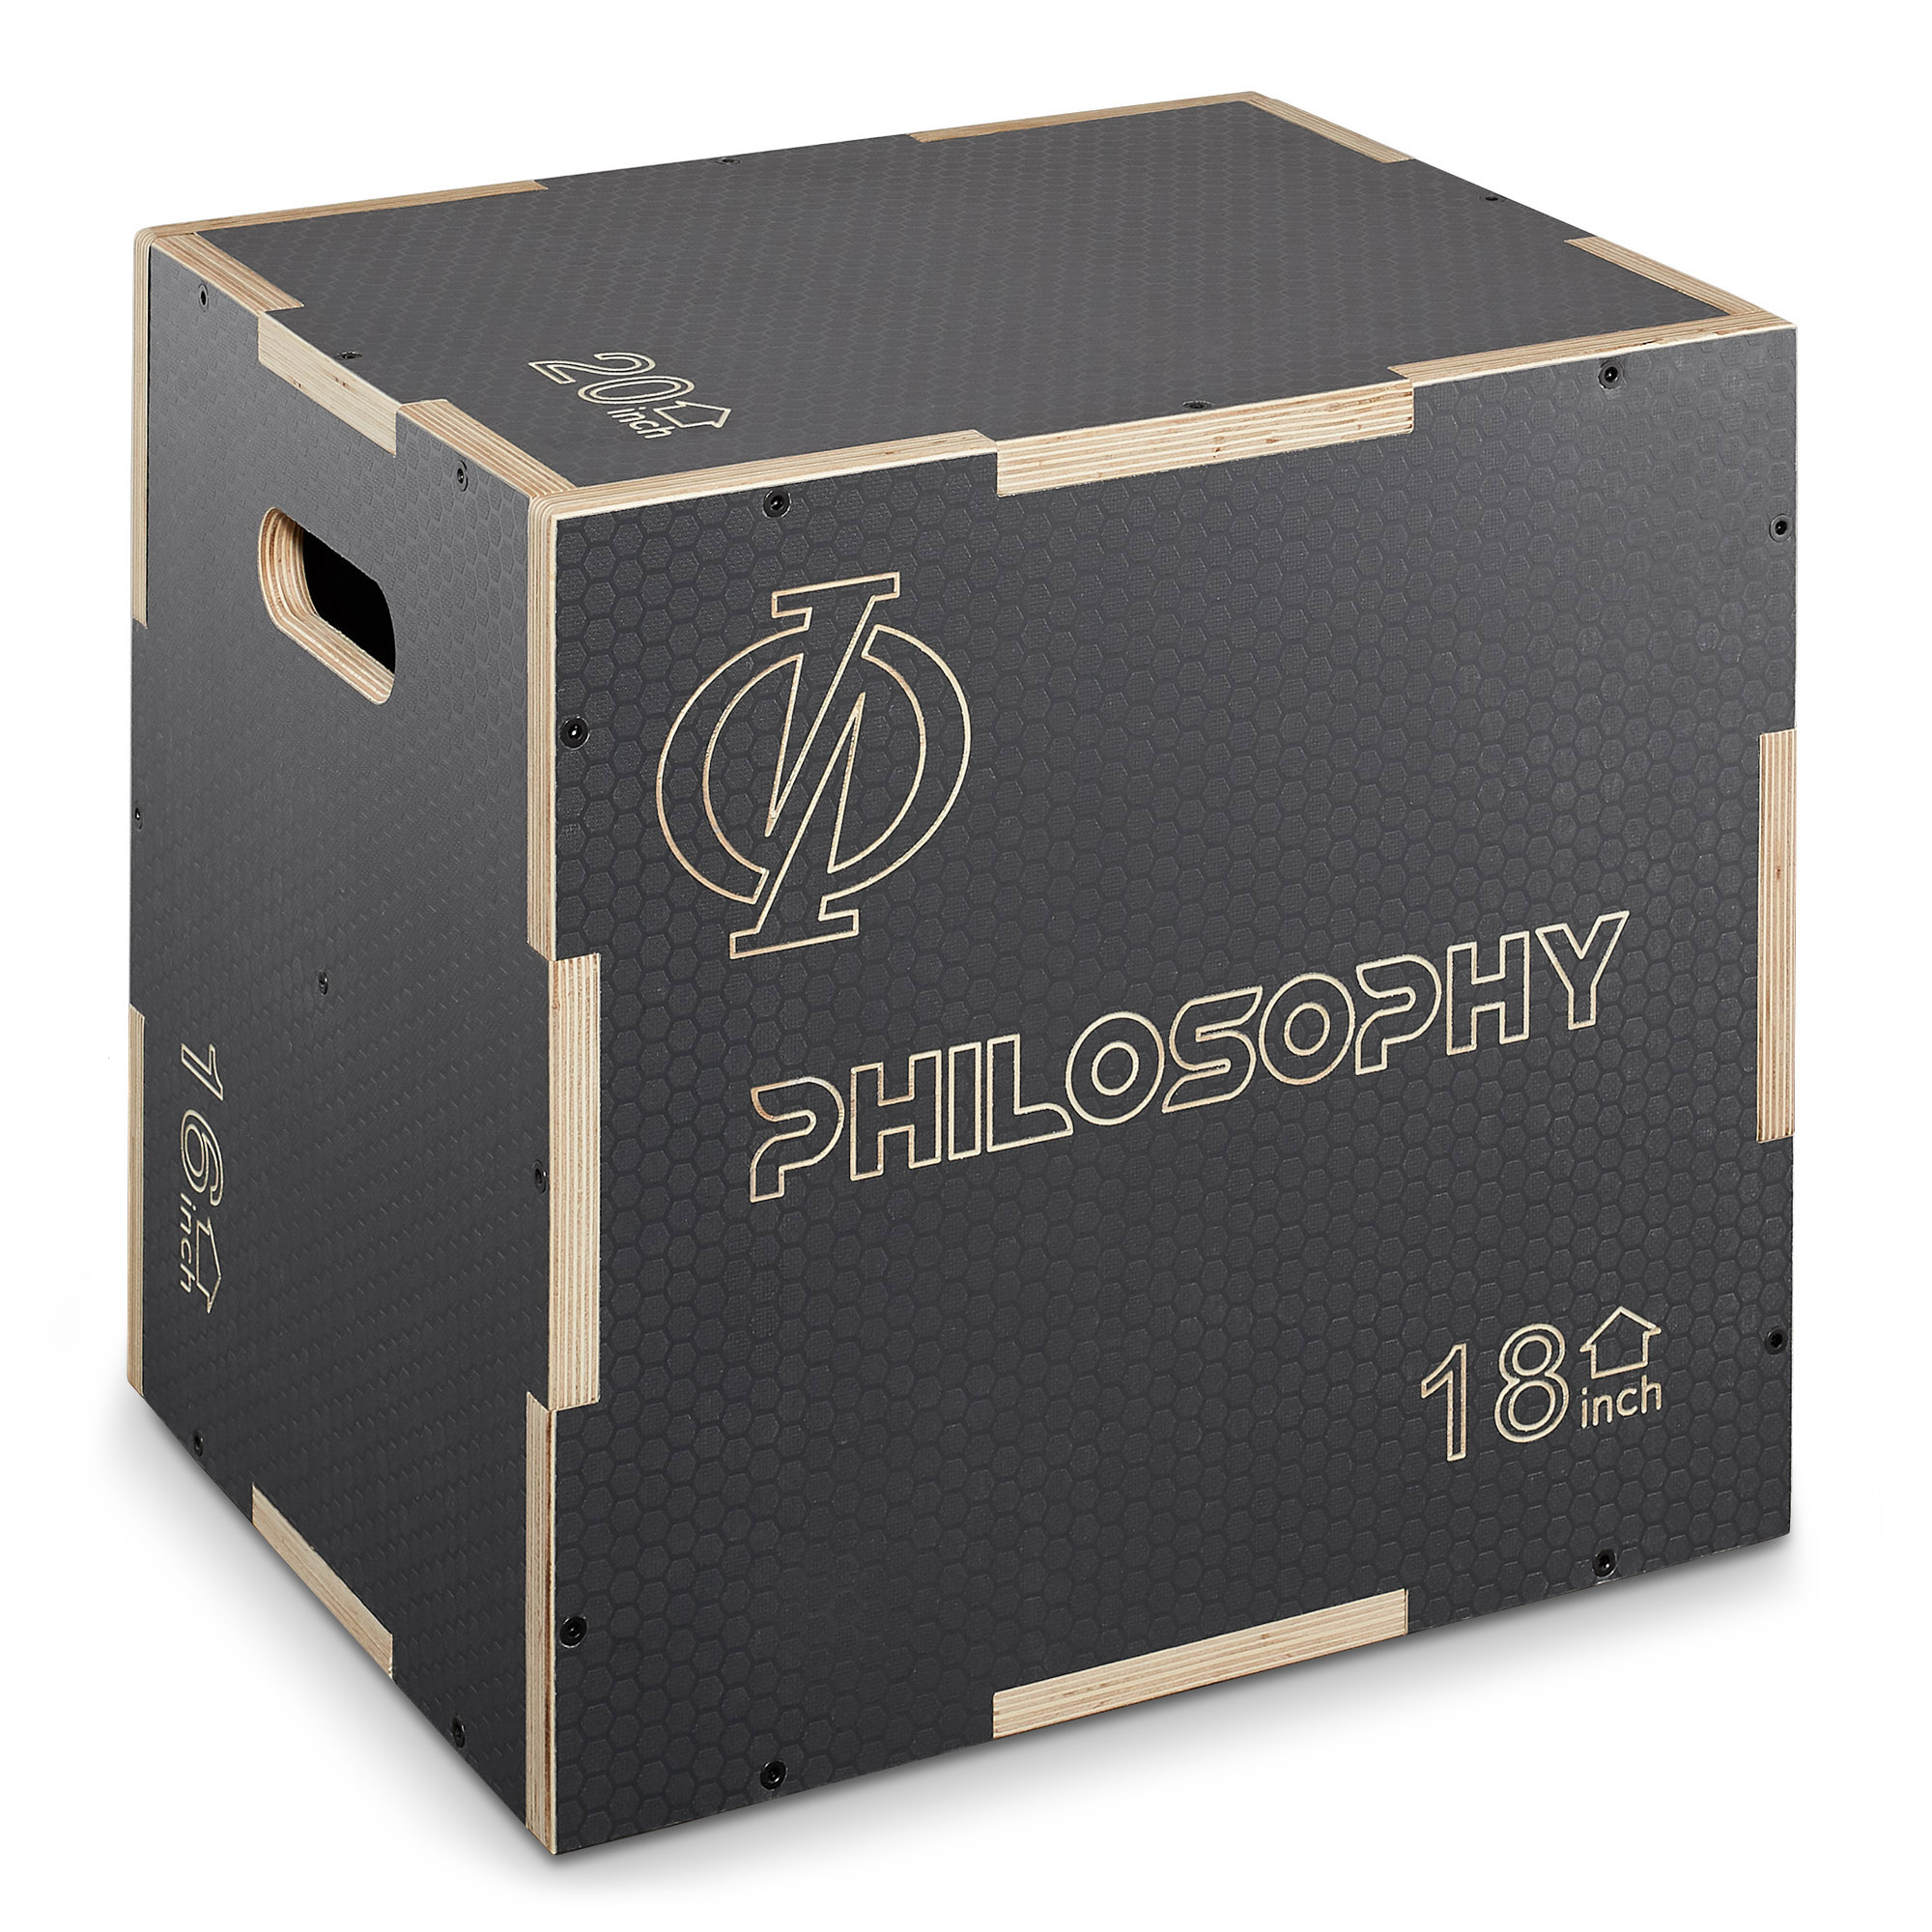 Philosophy Gym 3 in 1 Non-Slip Plyo Box, 20" x 18" x 16", Gray, Jump Box for Training